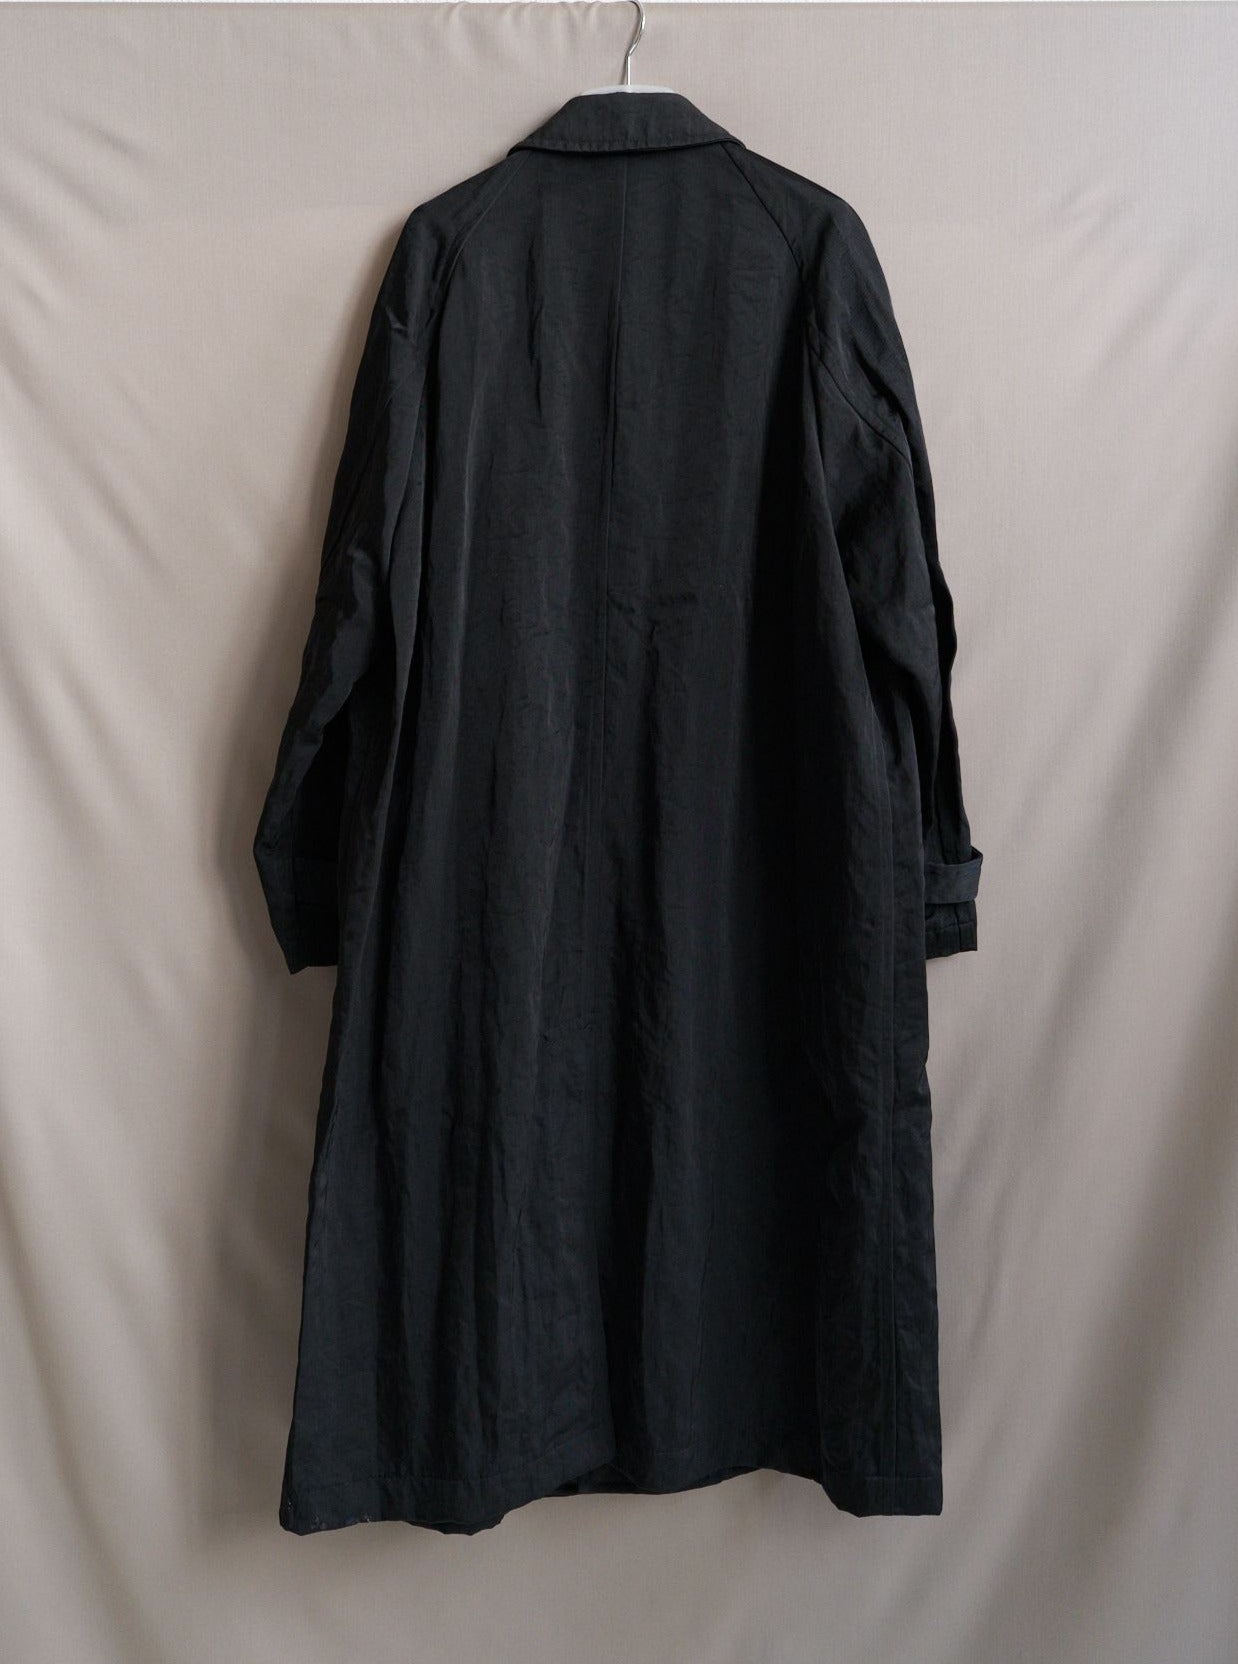 Comme des Garcons Homme AW1993 black creased nylon mackintosh coat - mens M